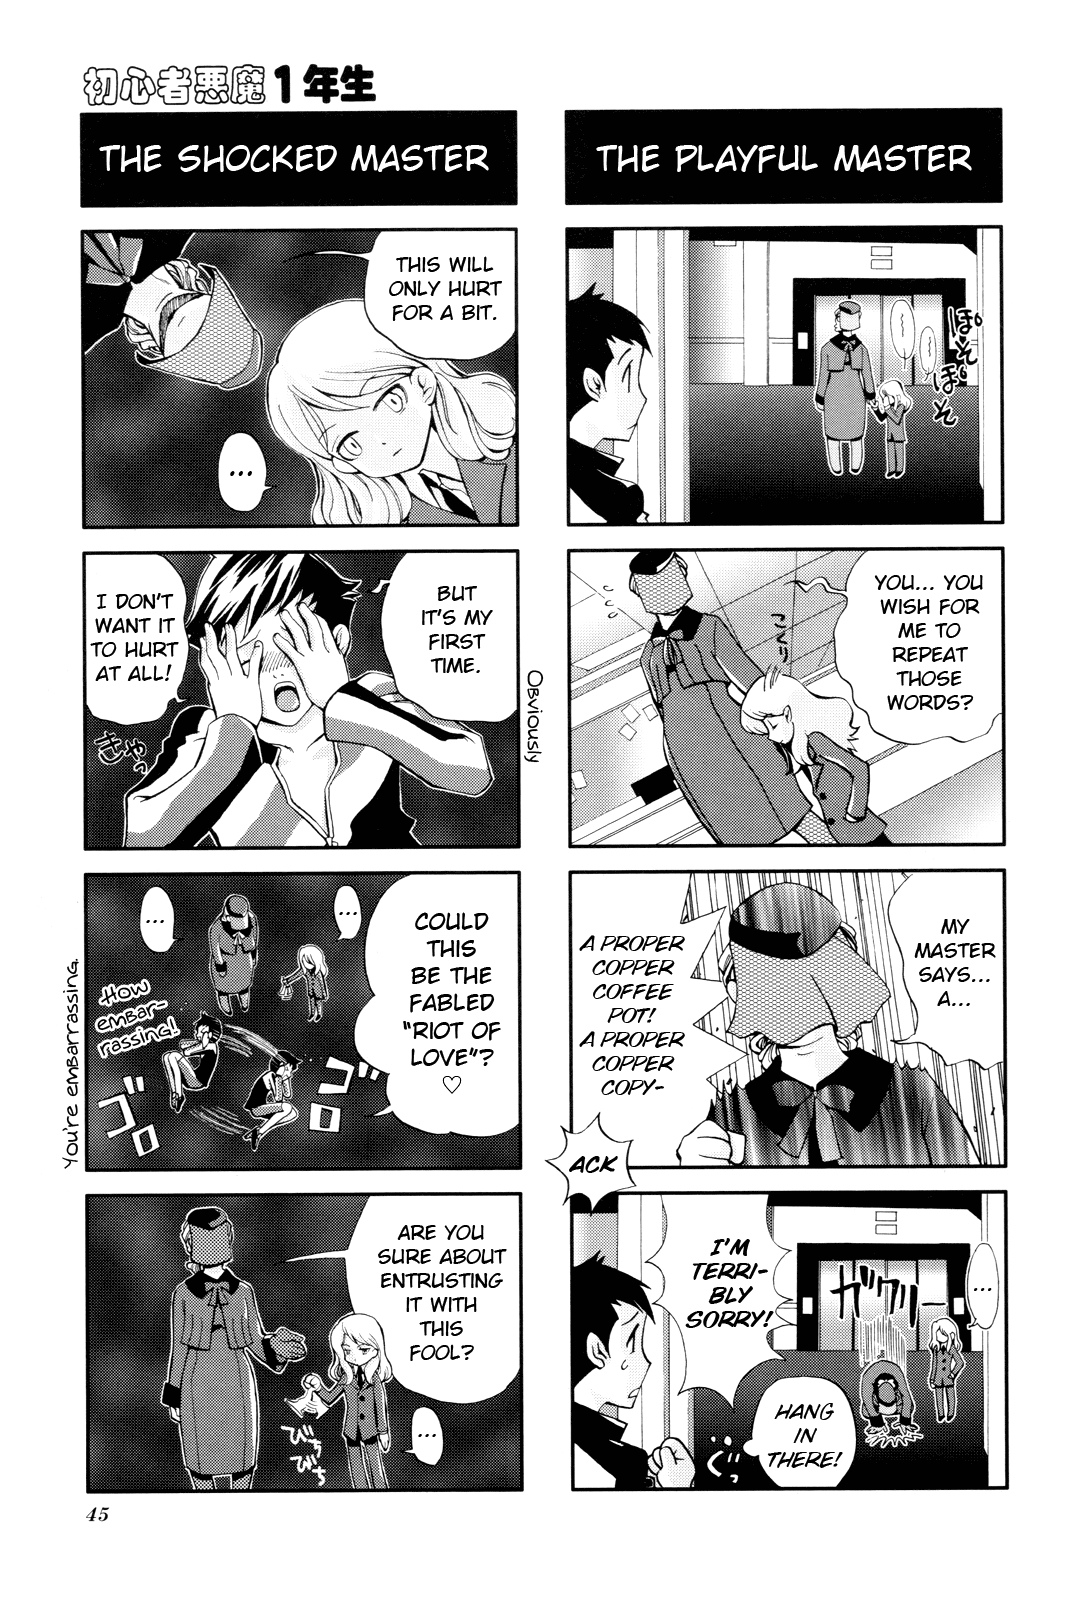 Shin Megami Tensei Iii - Nocturne 4-Koma Gag Battle - Page 2